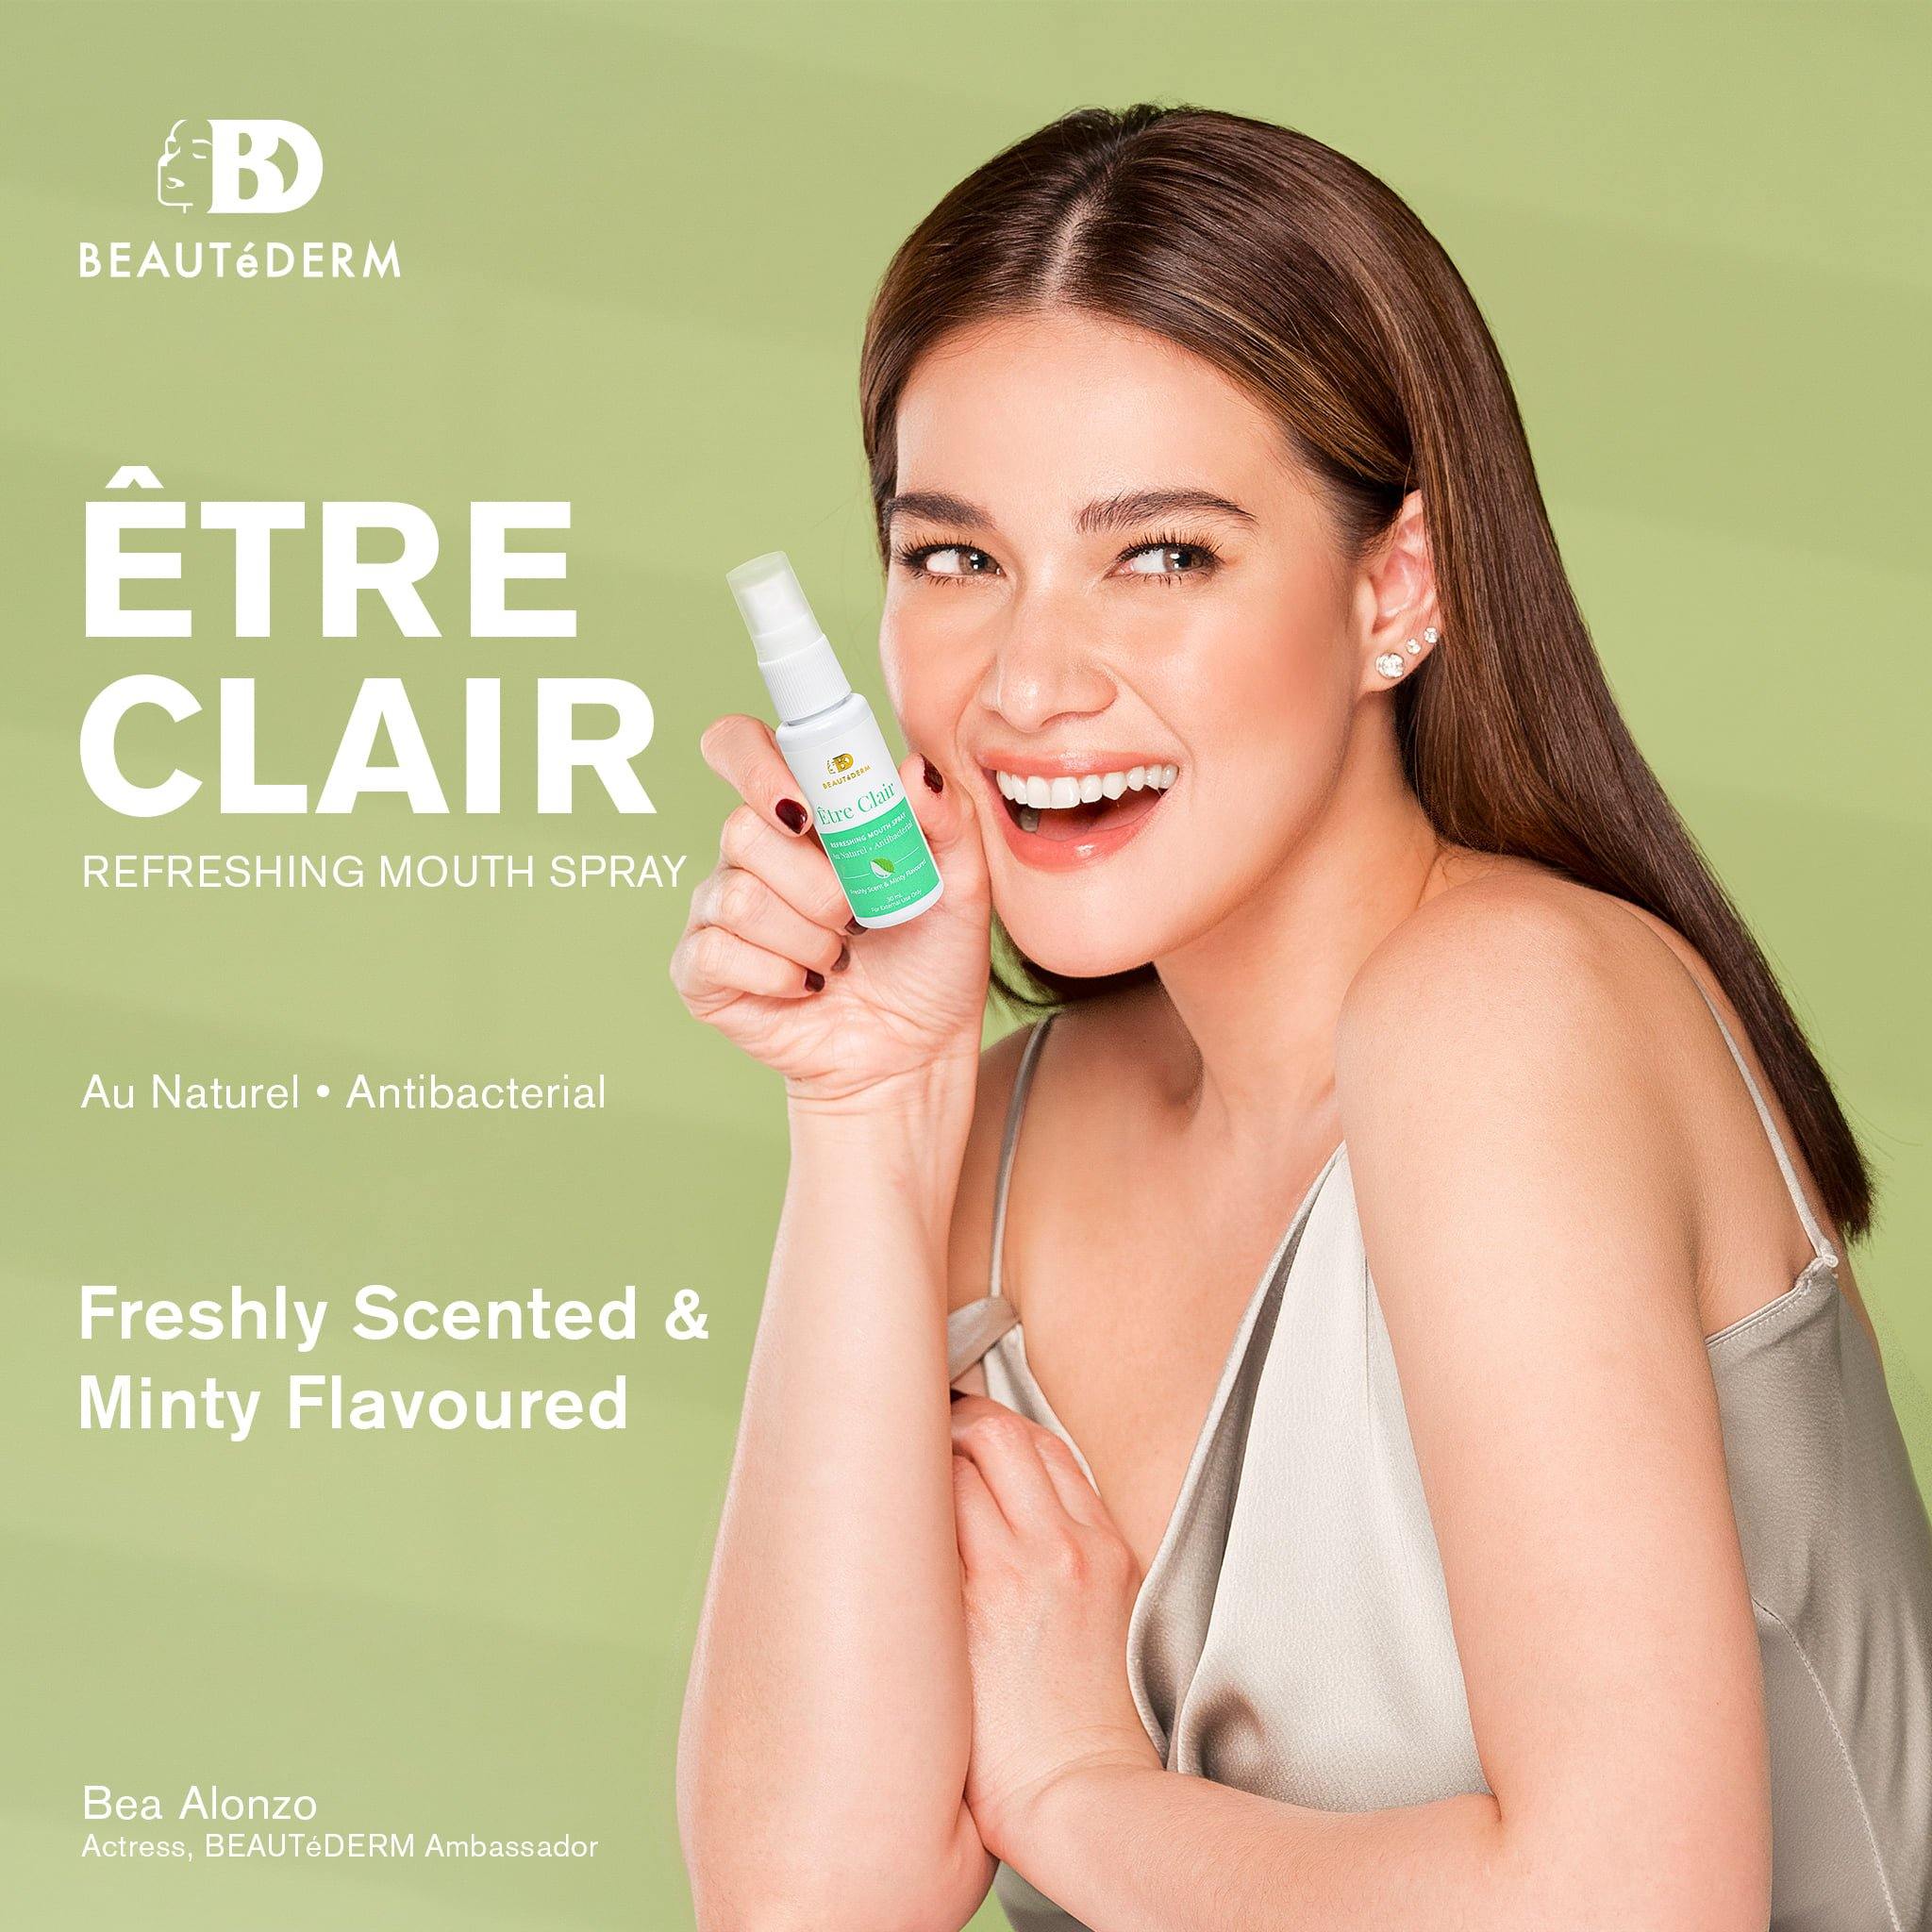 Etre Clair Refreshing Mouth Spray, 30ml, by Beautederm, with Bea Alonzo (Beautederm Ambassador)